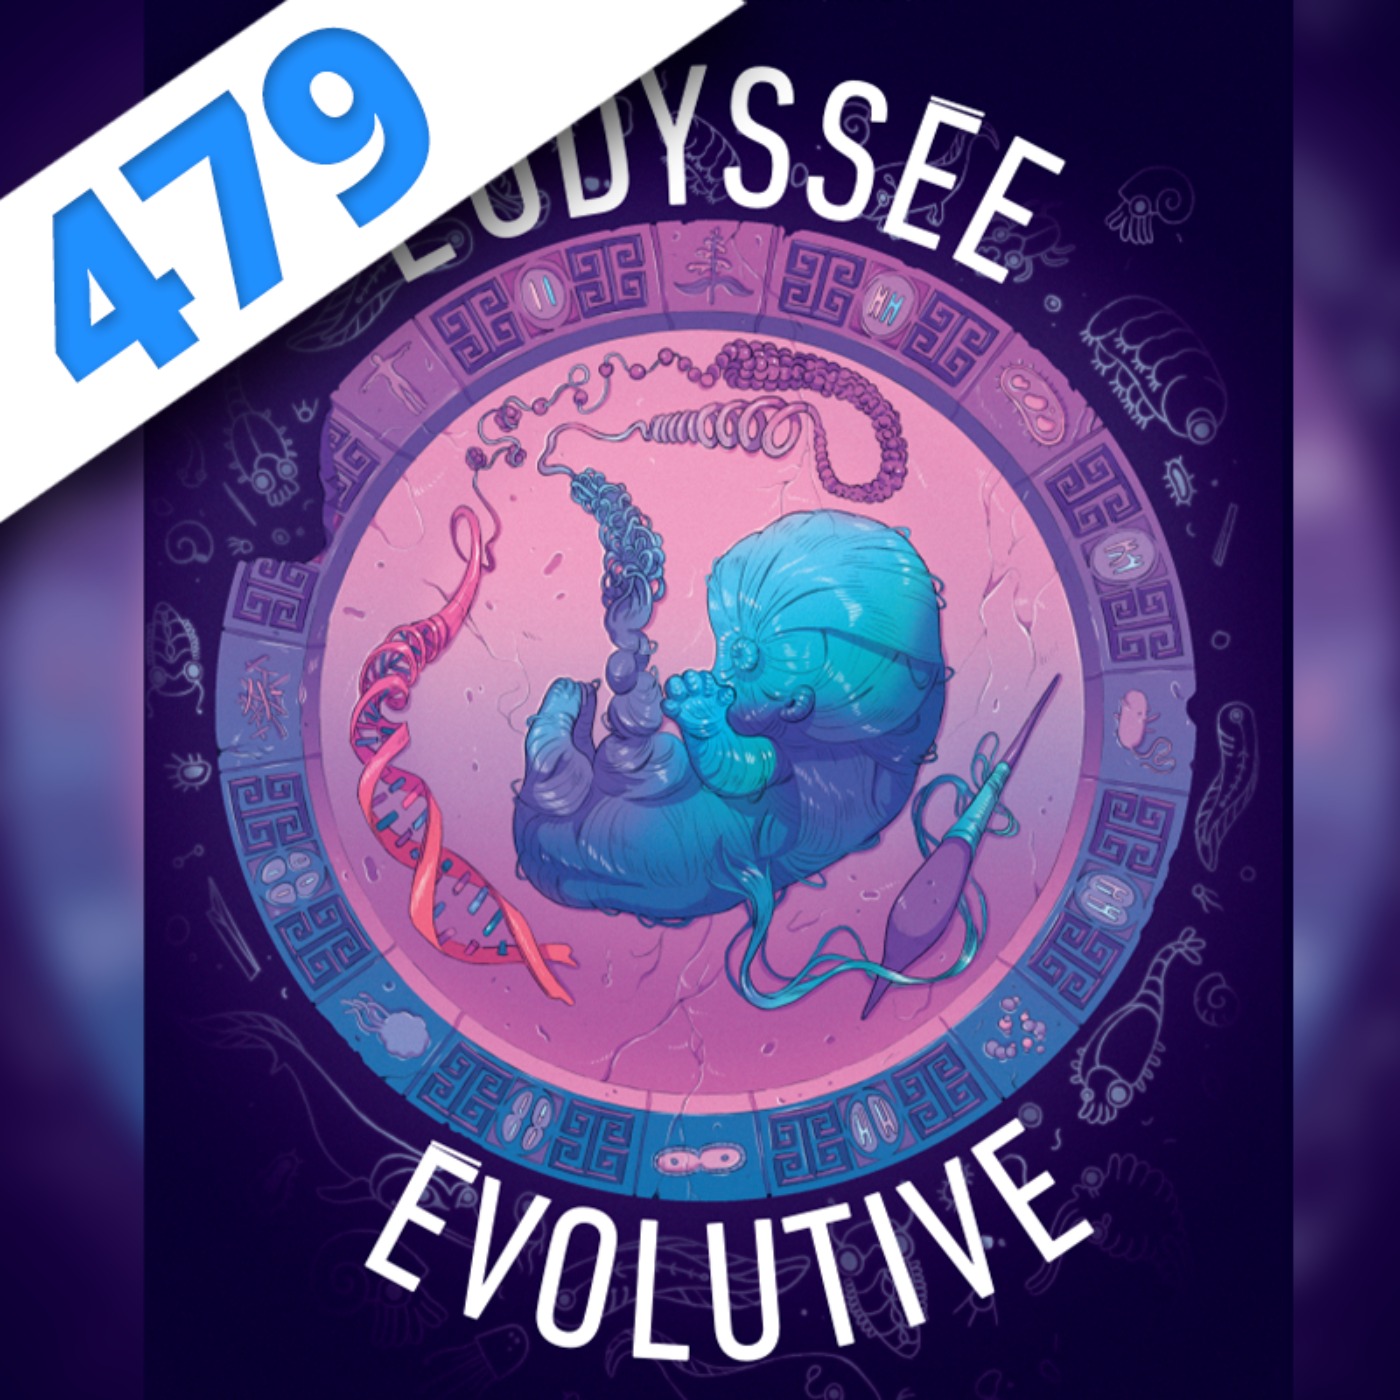 479 - L’Odyssée évolutive